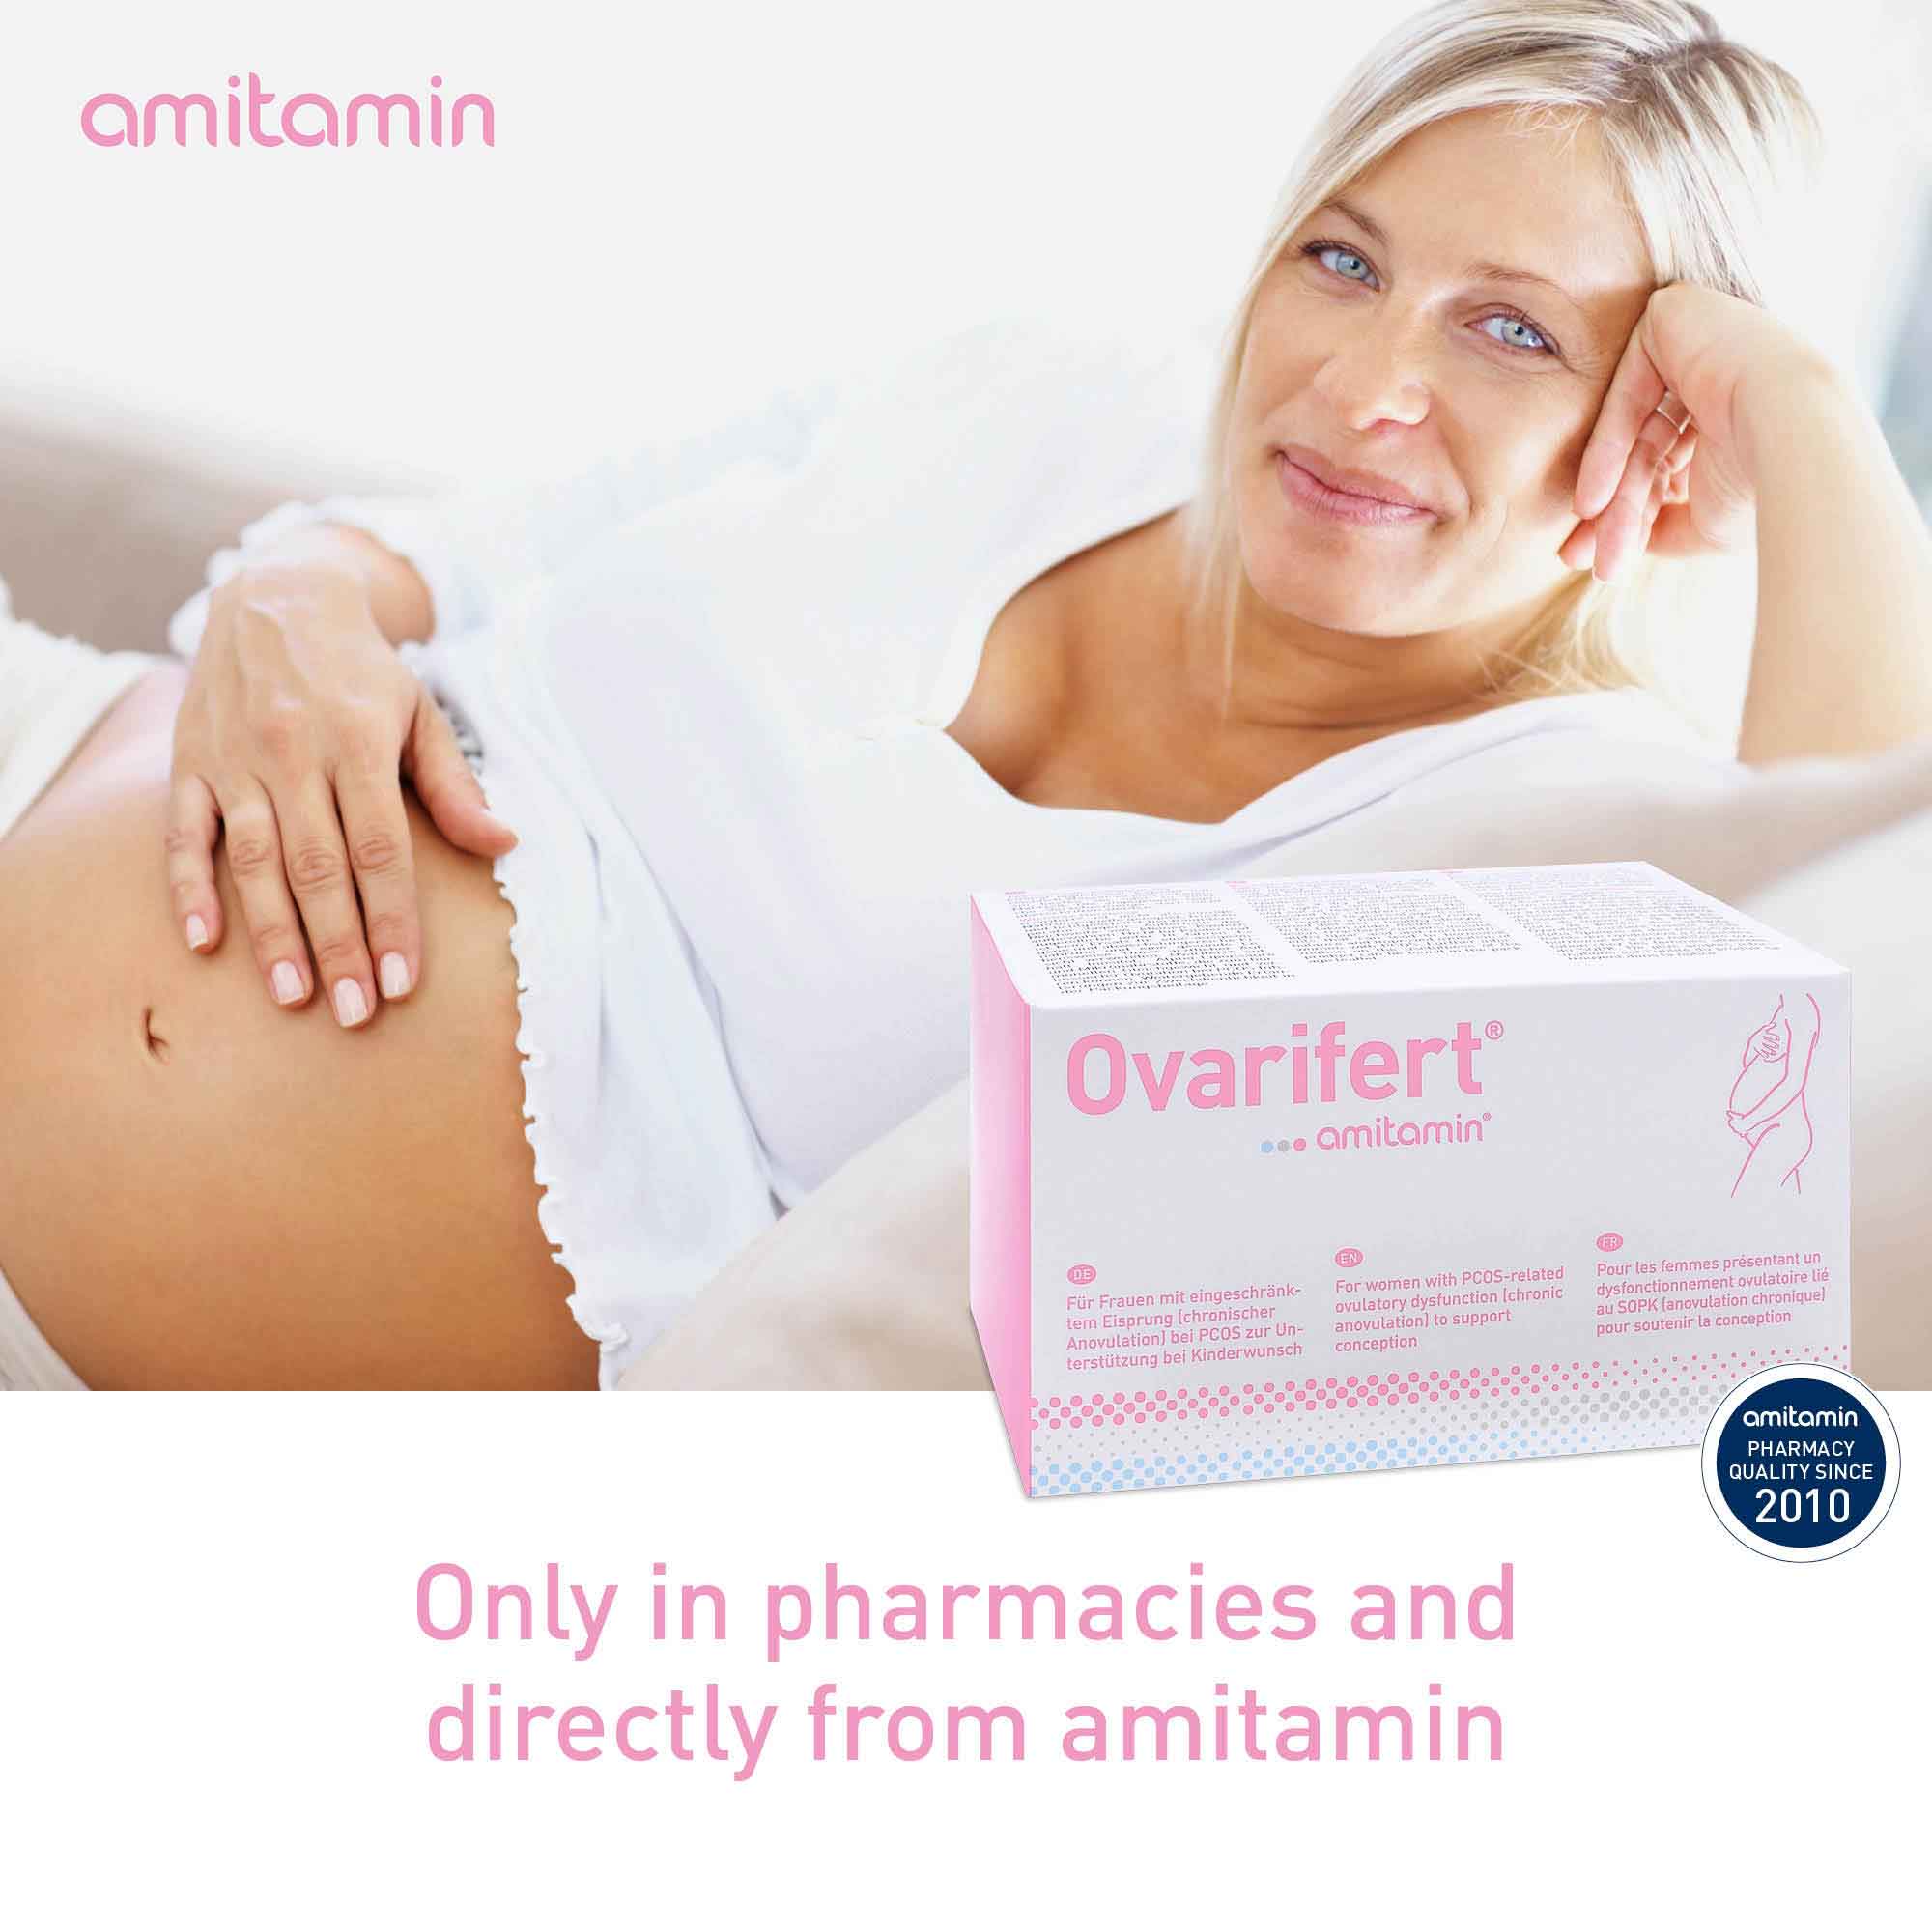 amitamin Female Comfort Bundle - Ovarifert + PMS Redux (Each Pack for 30 Days)